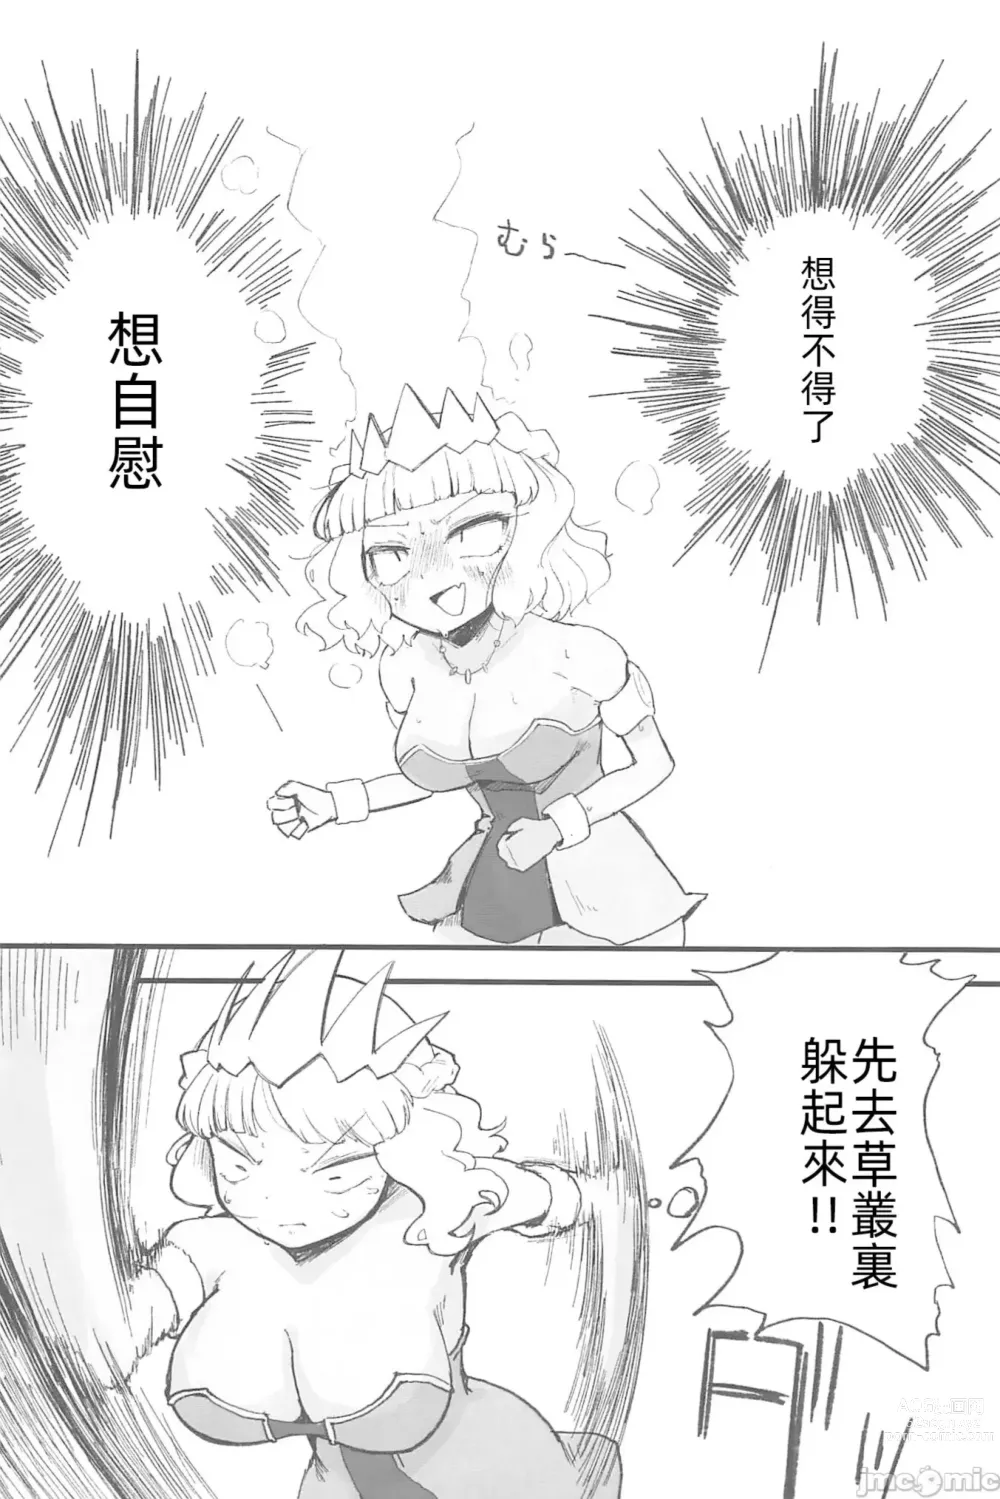 Page 5 of manga crosmcx12.13